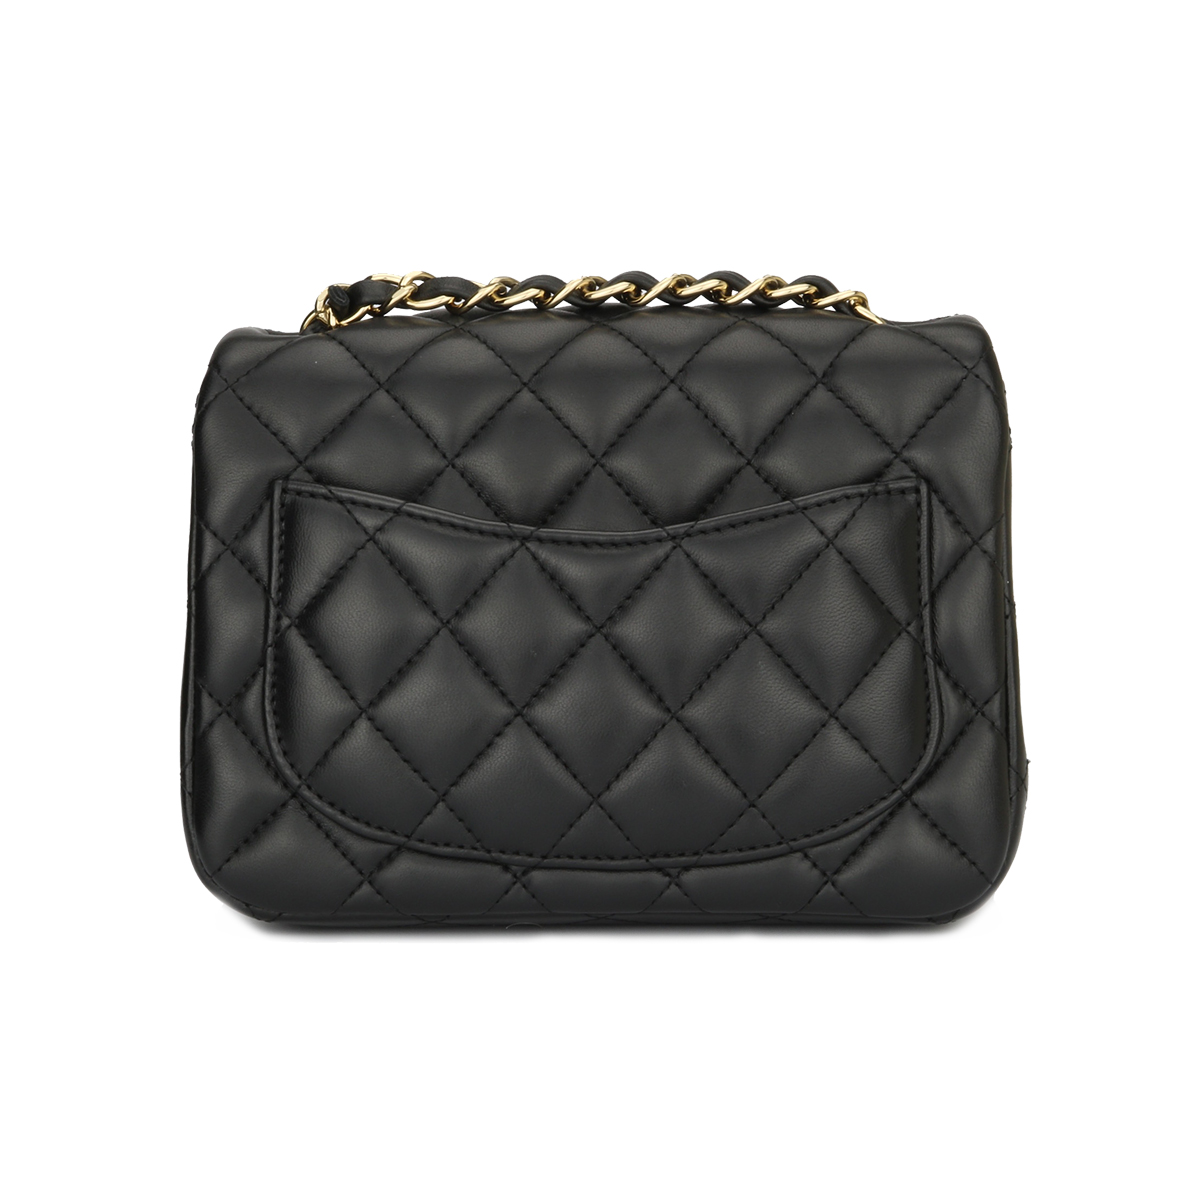 Chanel Mini Flap Bag Black FOR SALE! - PicClick